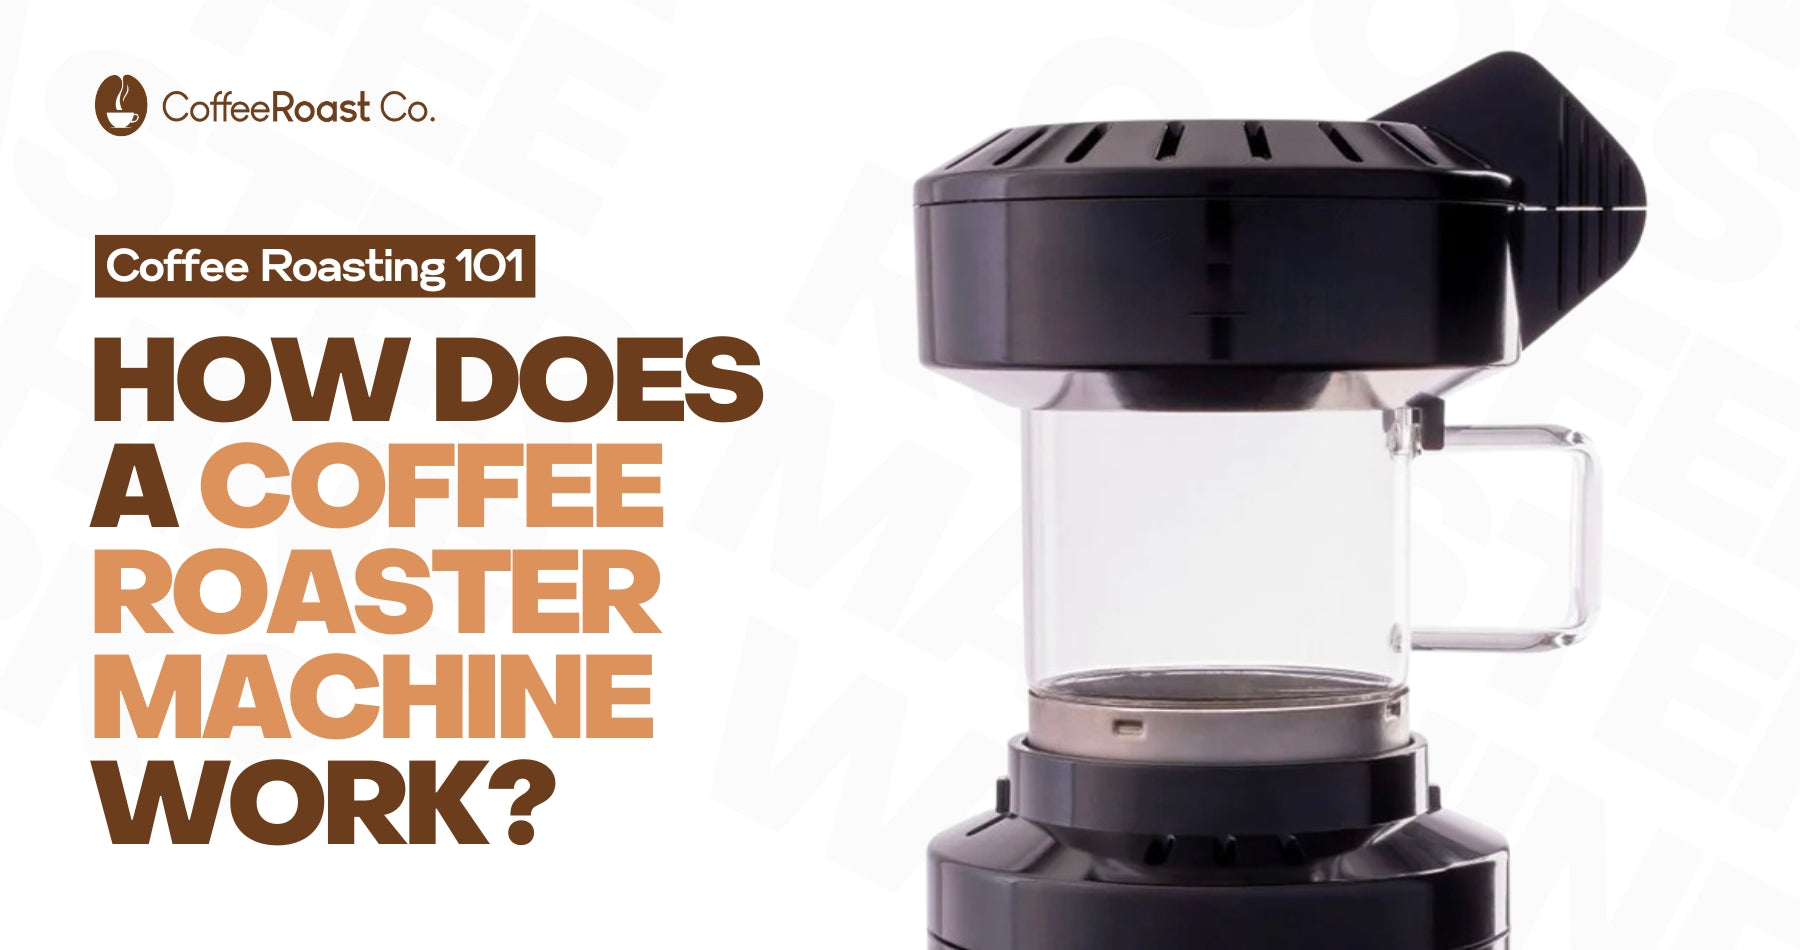 Coffee Roasting 101: How Does a Coffee Roaster Machine Work?